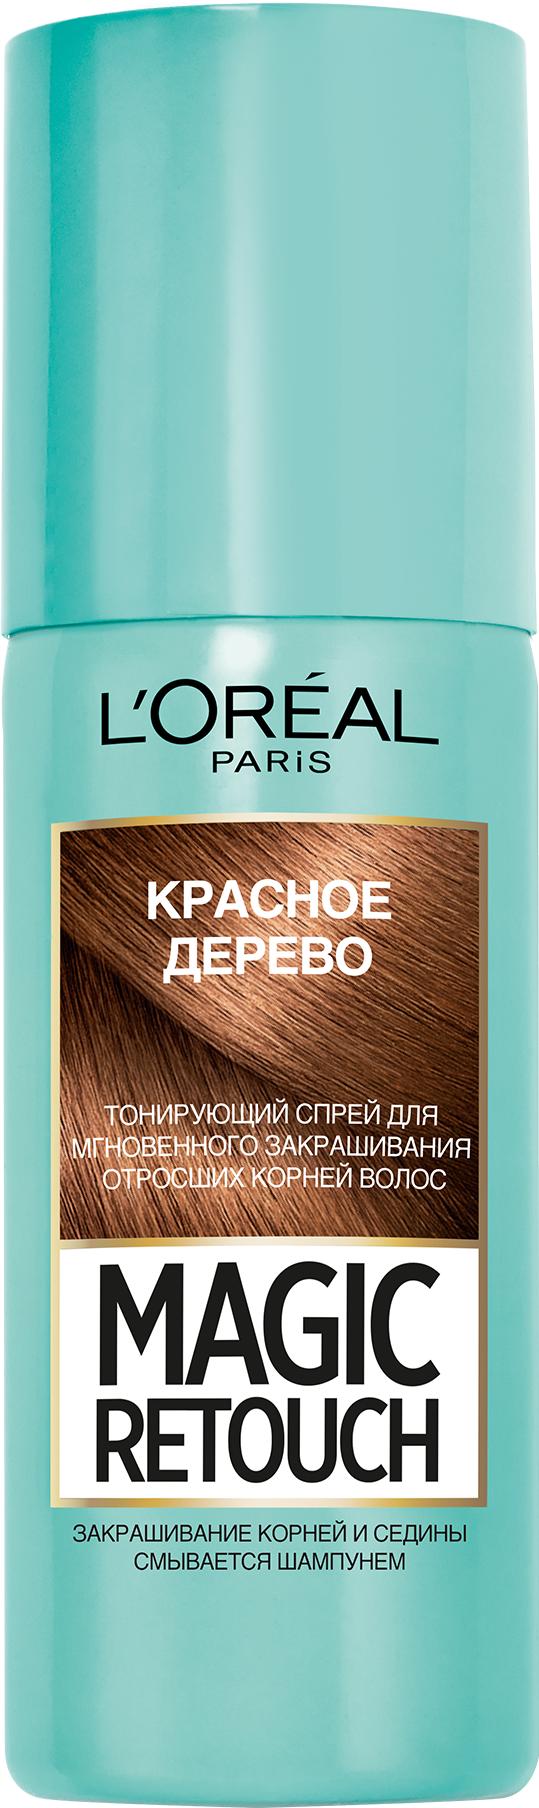 Тонирующий спрей для волос L'Oreal Paris Magic Retouch, тон 06 (красное дерево), 75 мл - фото 1